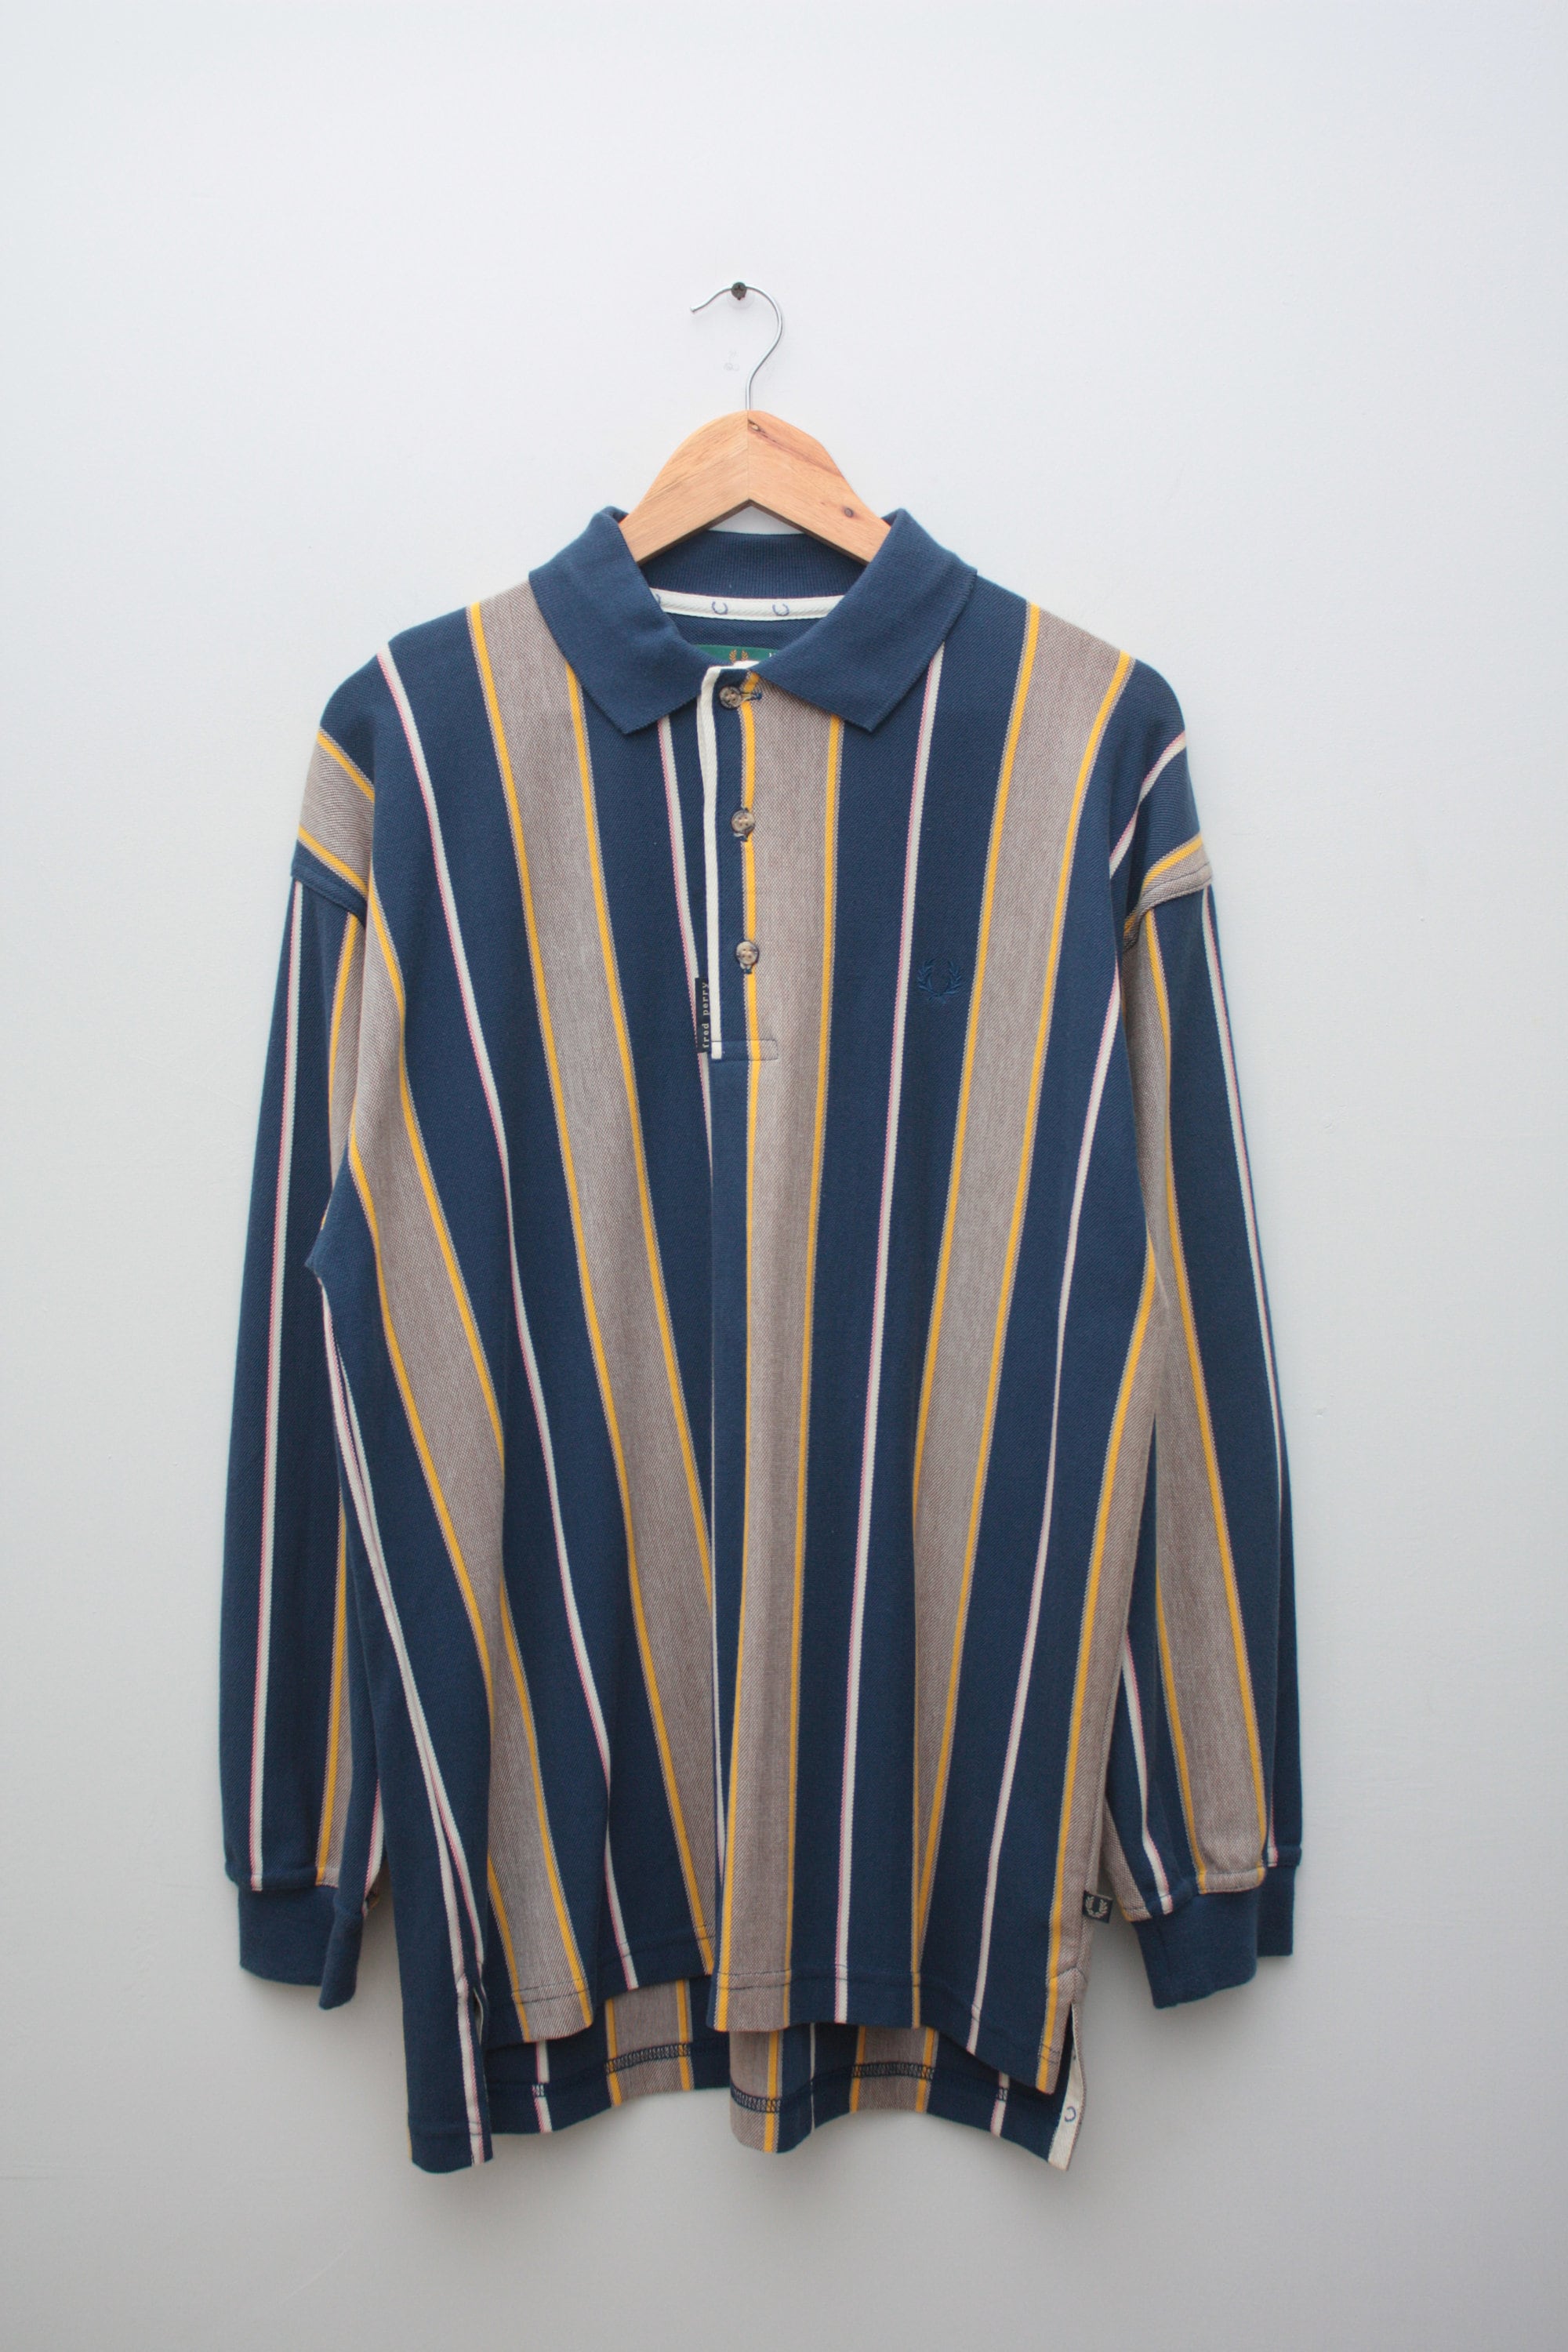 Louis Vuitton Blue and Black Horizontal Striped Cotton Pique Polo